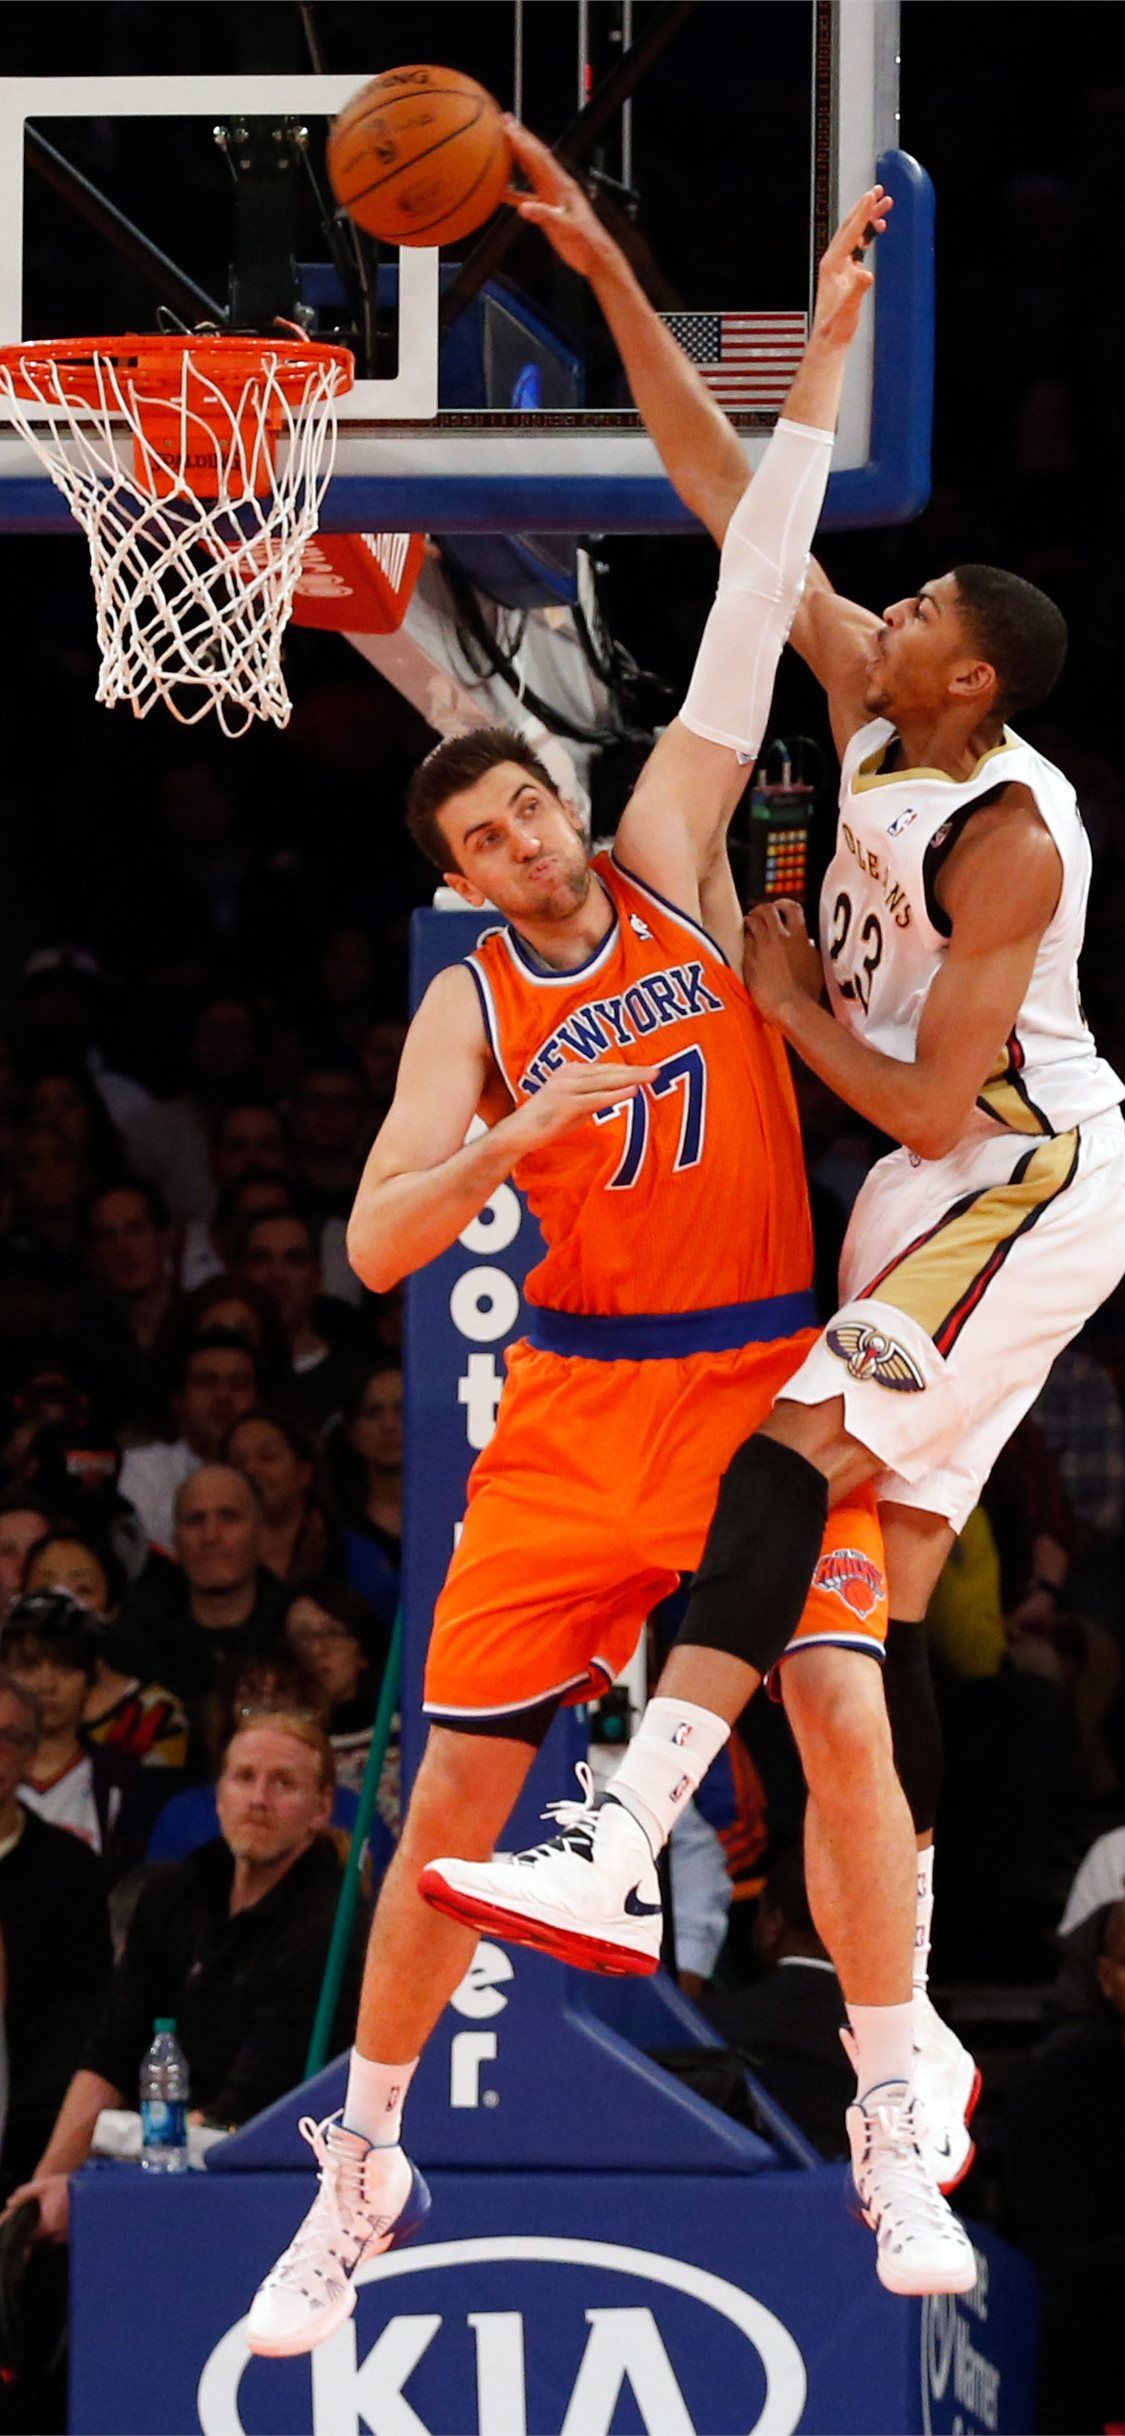 Free Anthony Davisin elinde krk NBA for your iPhone X Wallpaper Free Download